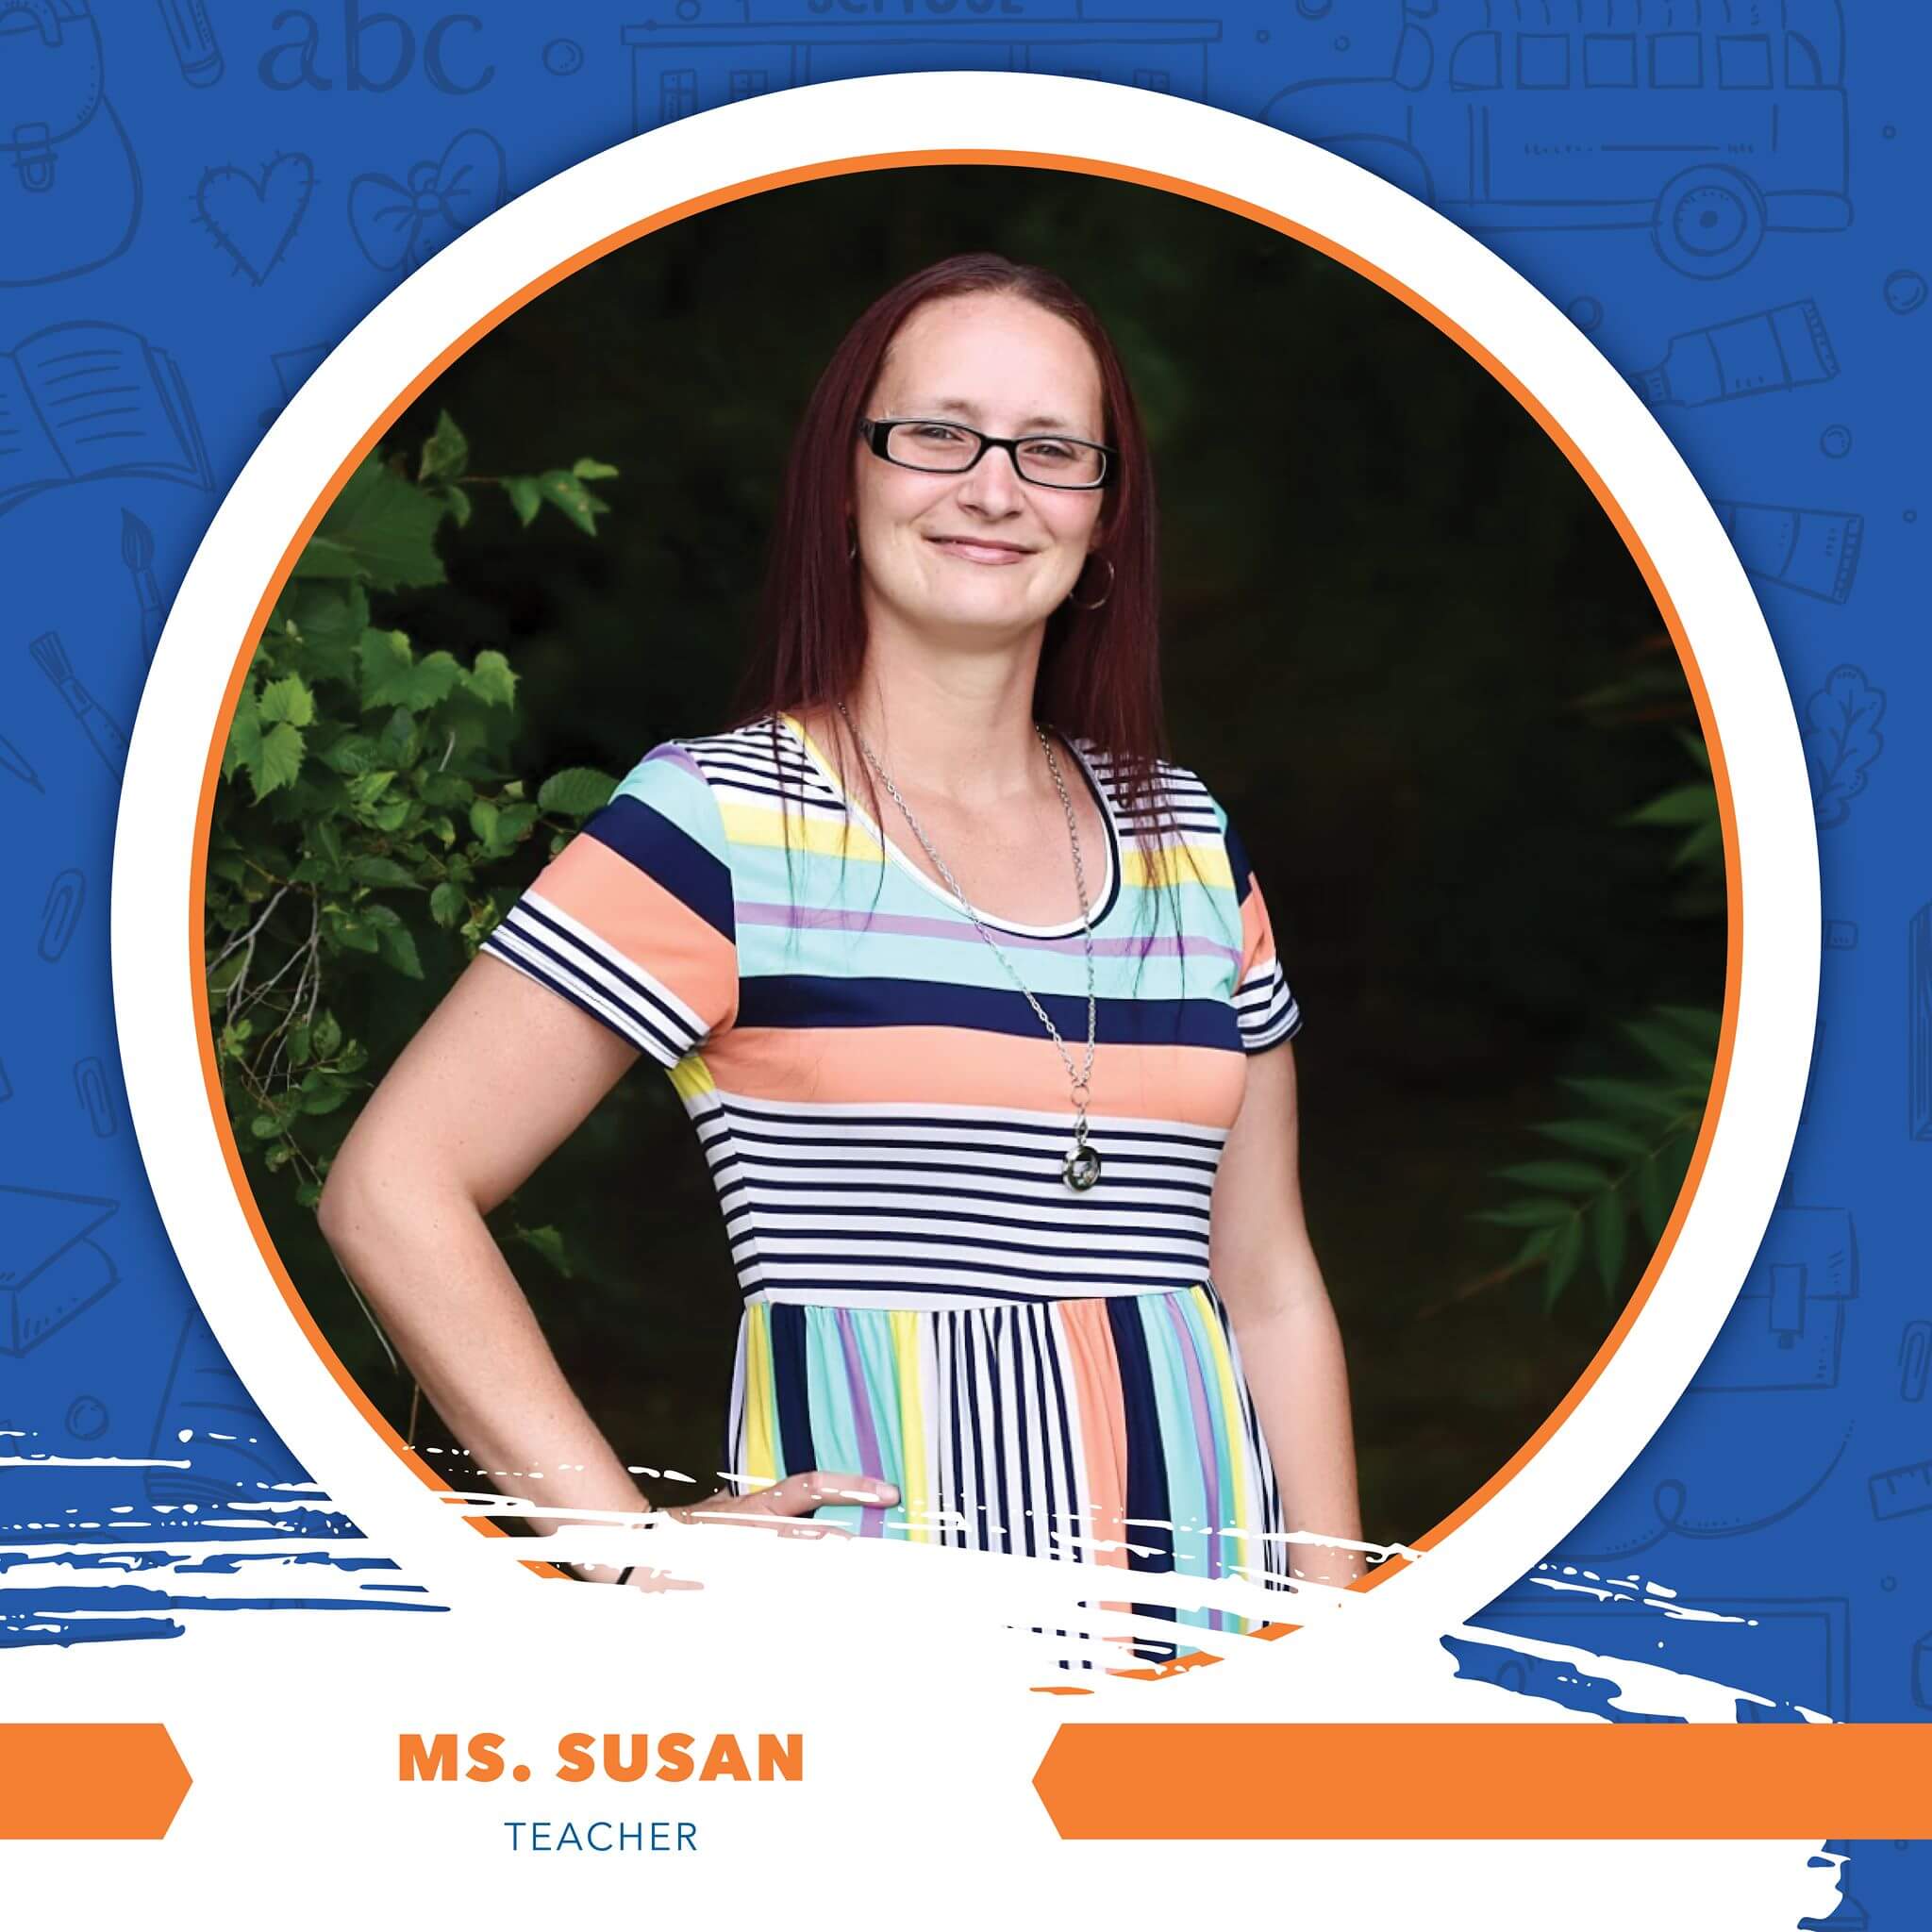 Ms. Susan - Teacher